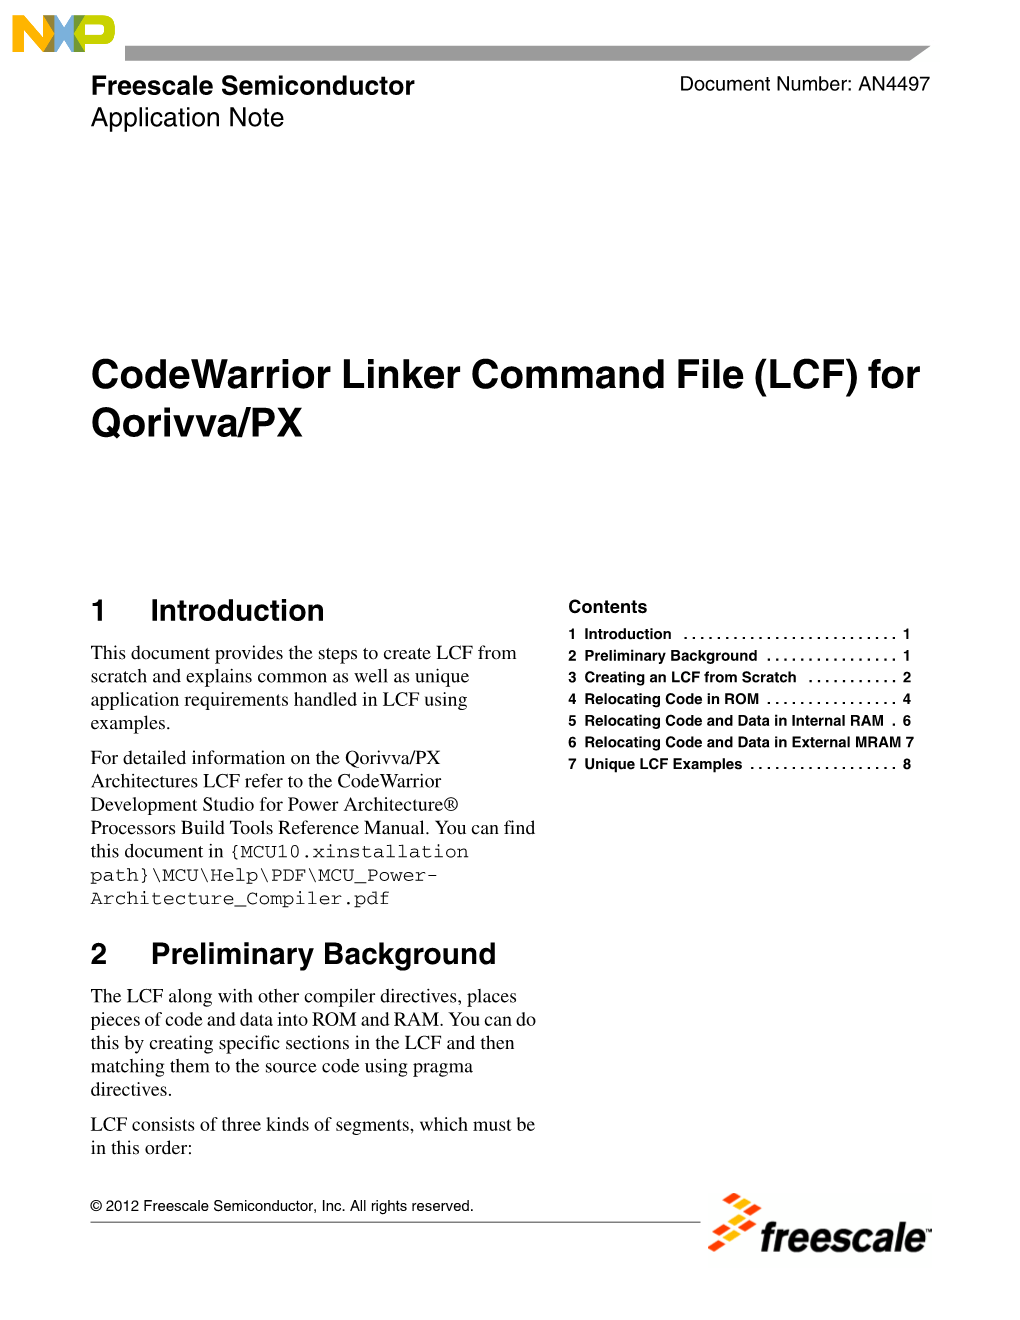 Codewarrior Linker Command File (LCF) for Qorivva/PX